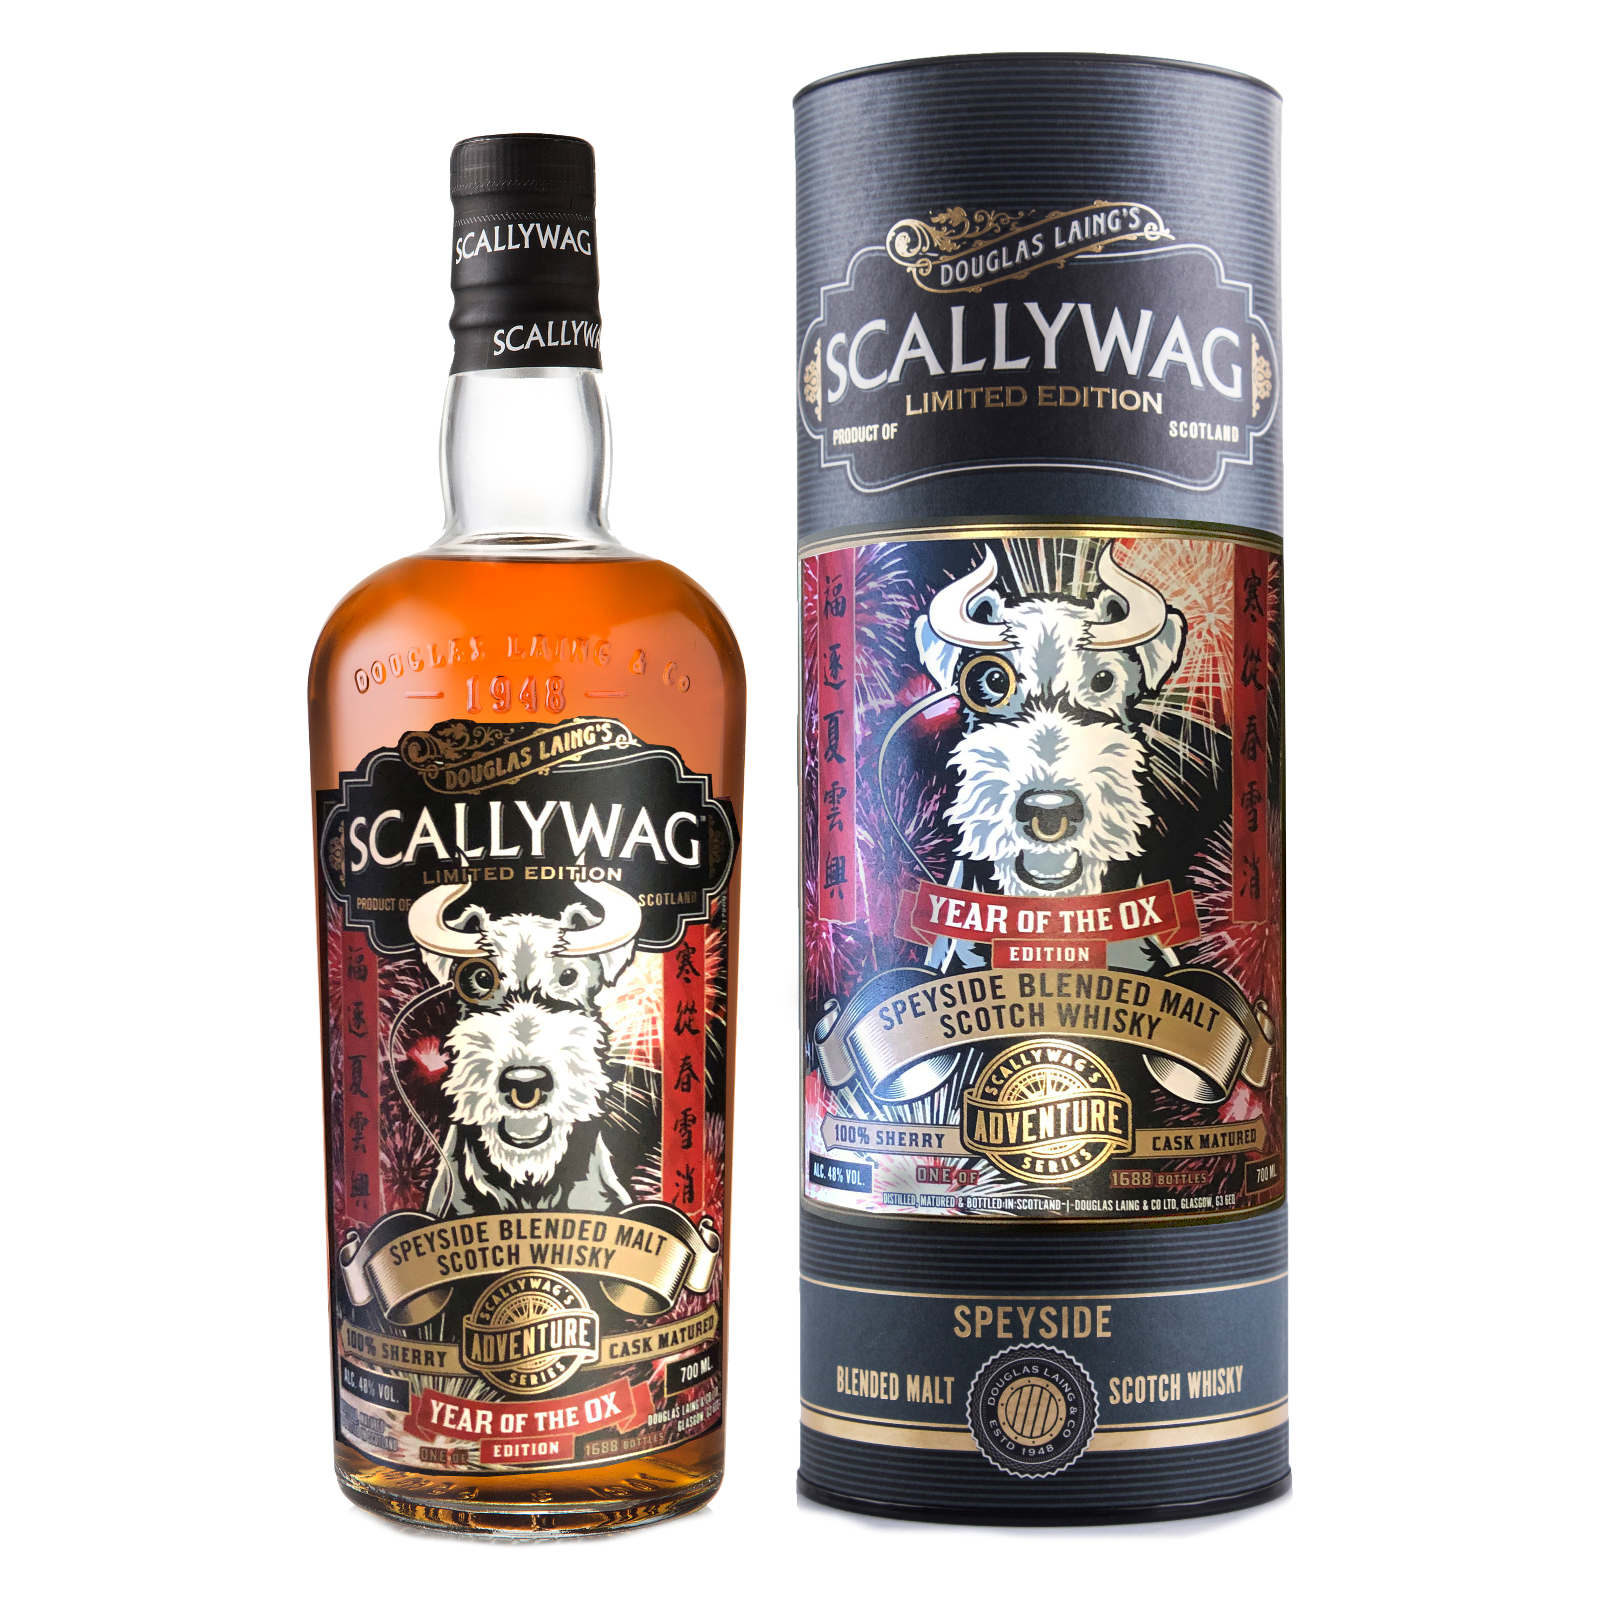 Scallywag Year of the Ox Edition Sherry Cask Malt Whisky – Speyside, Scotland